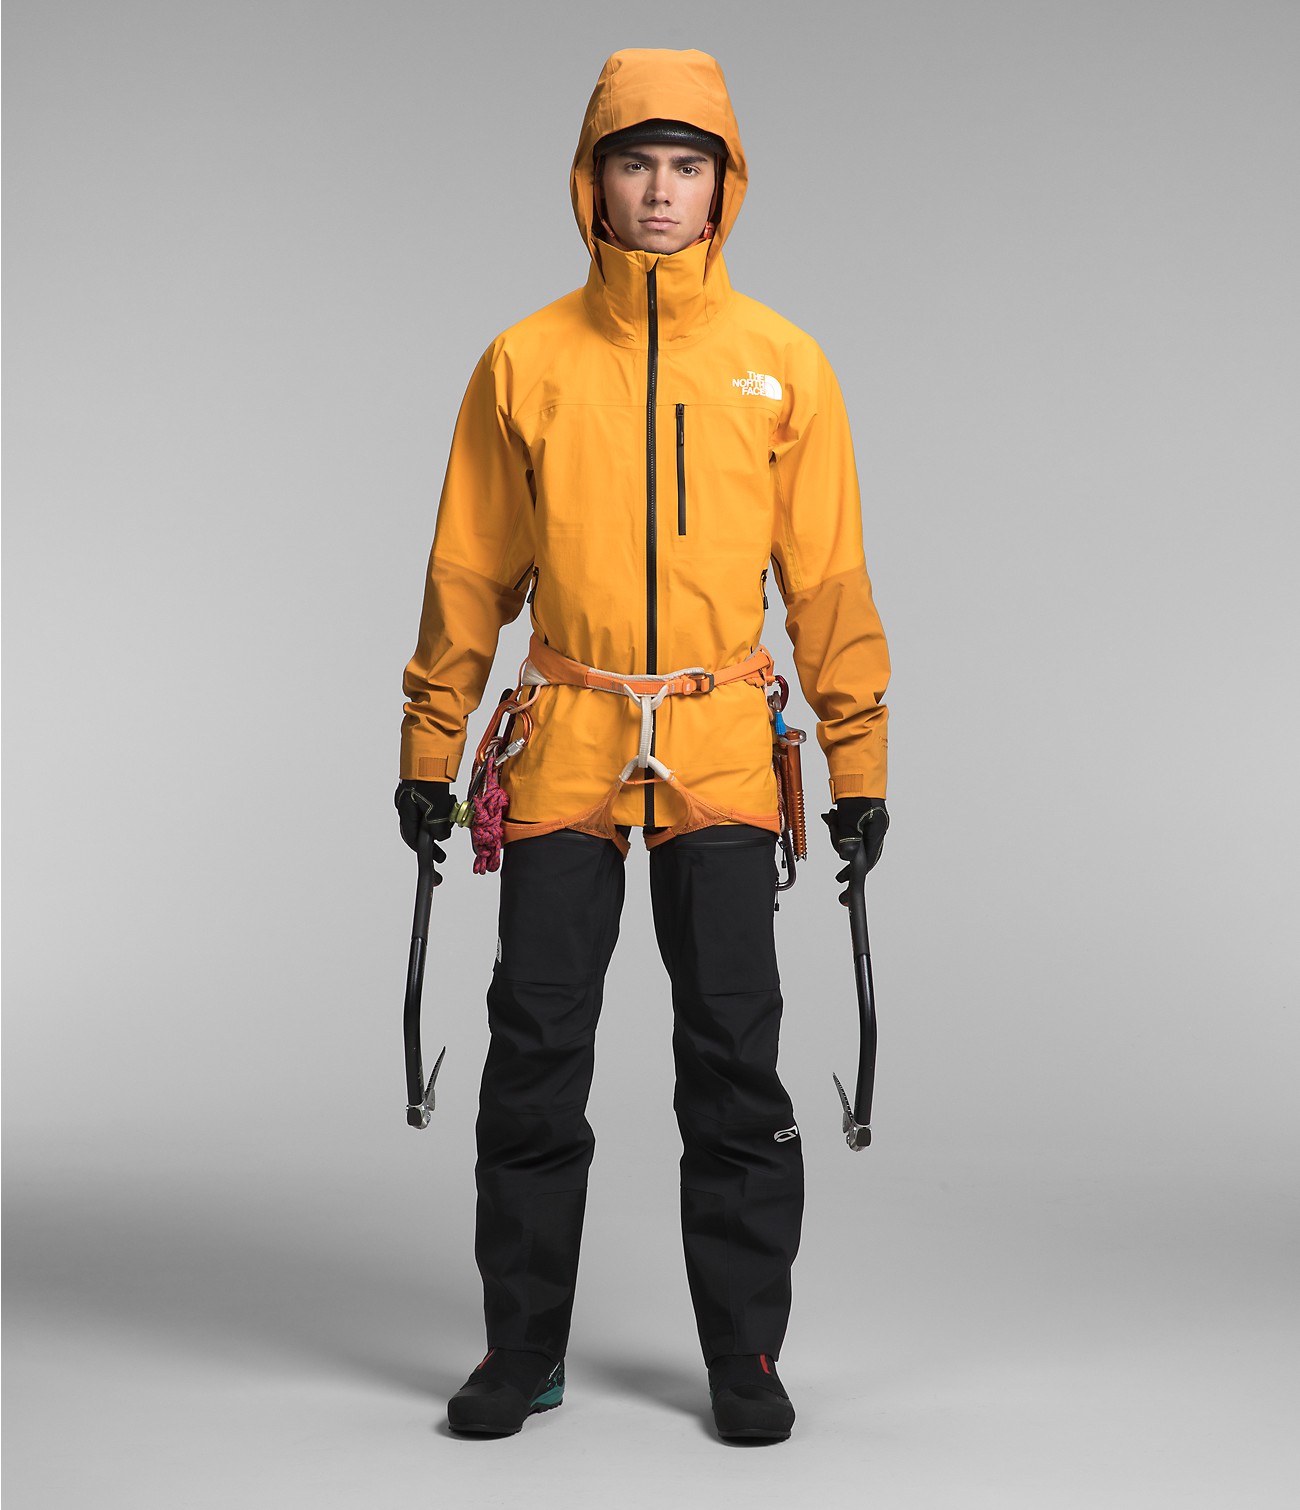 Men’s Summit Series Torre Egger FUTURELIGHT™ Jacket | The North Face